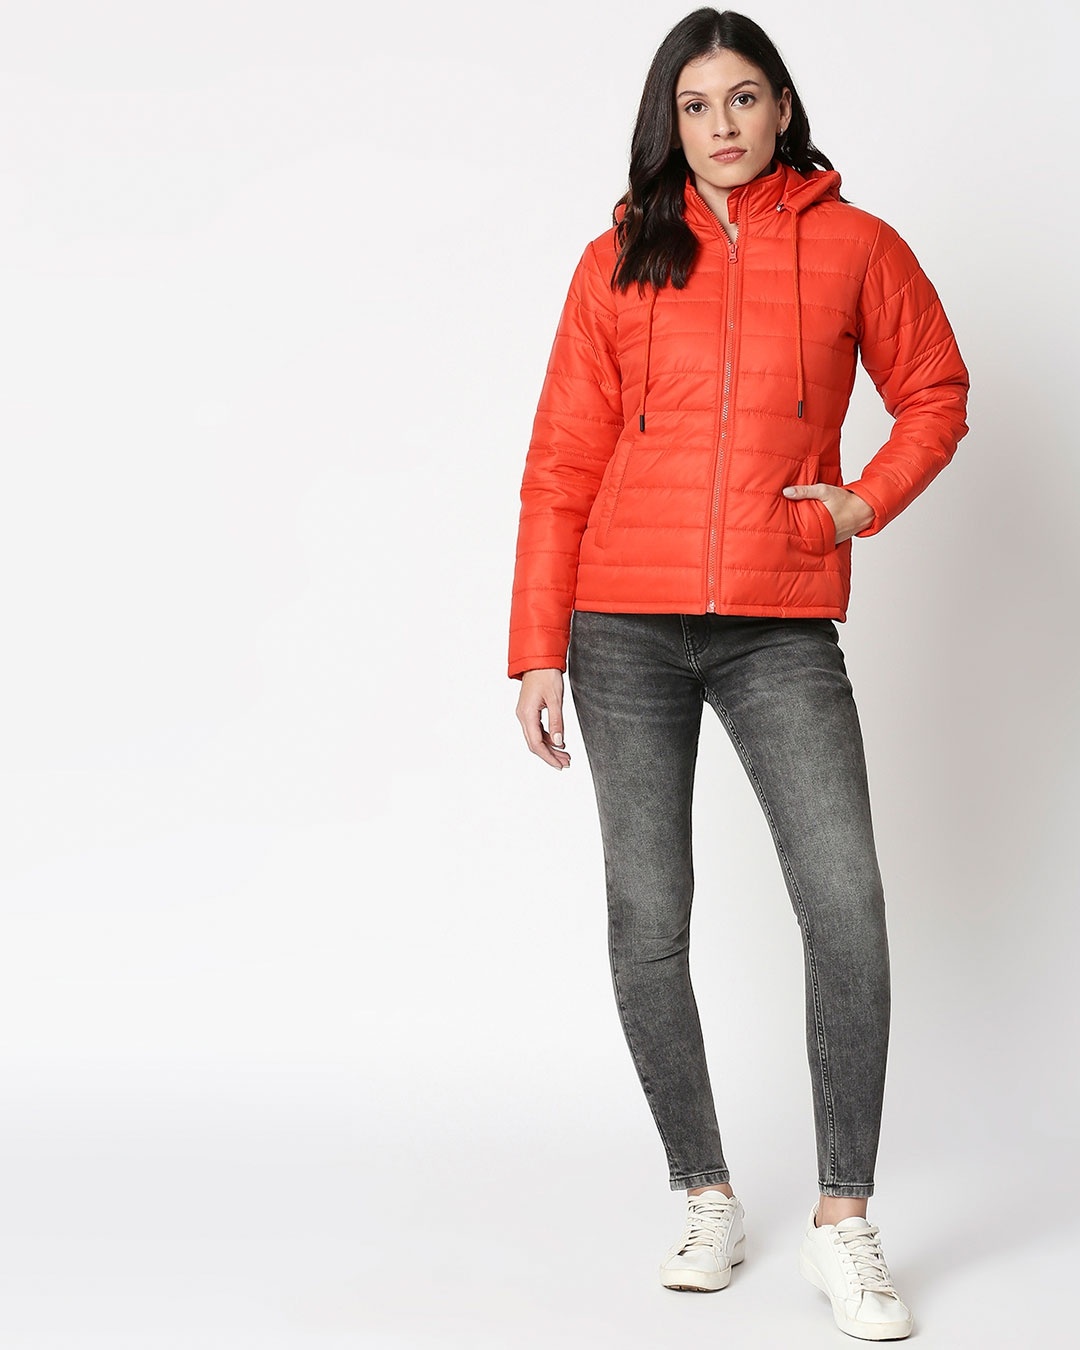 Shop Orange Plain Puffer Jacket with Detachable Hood